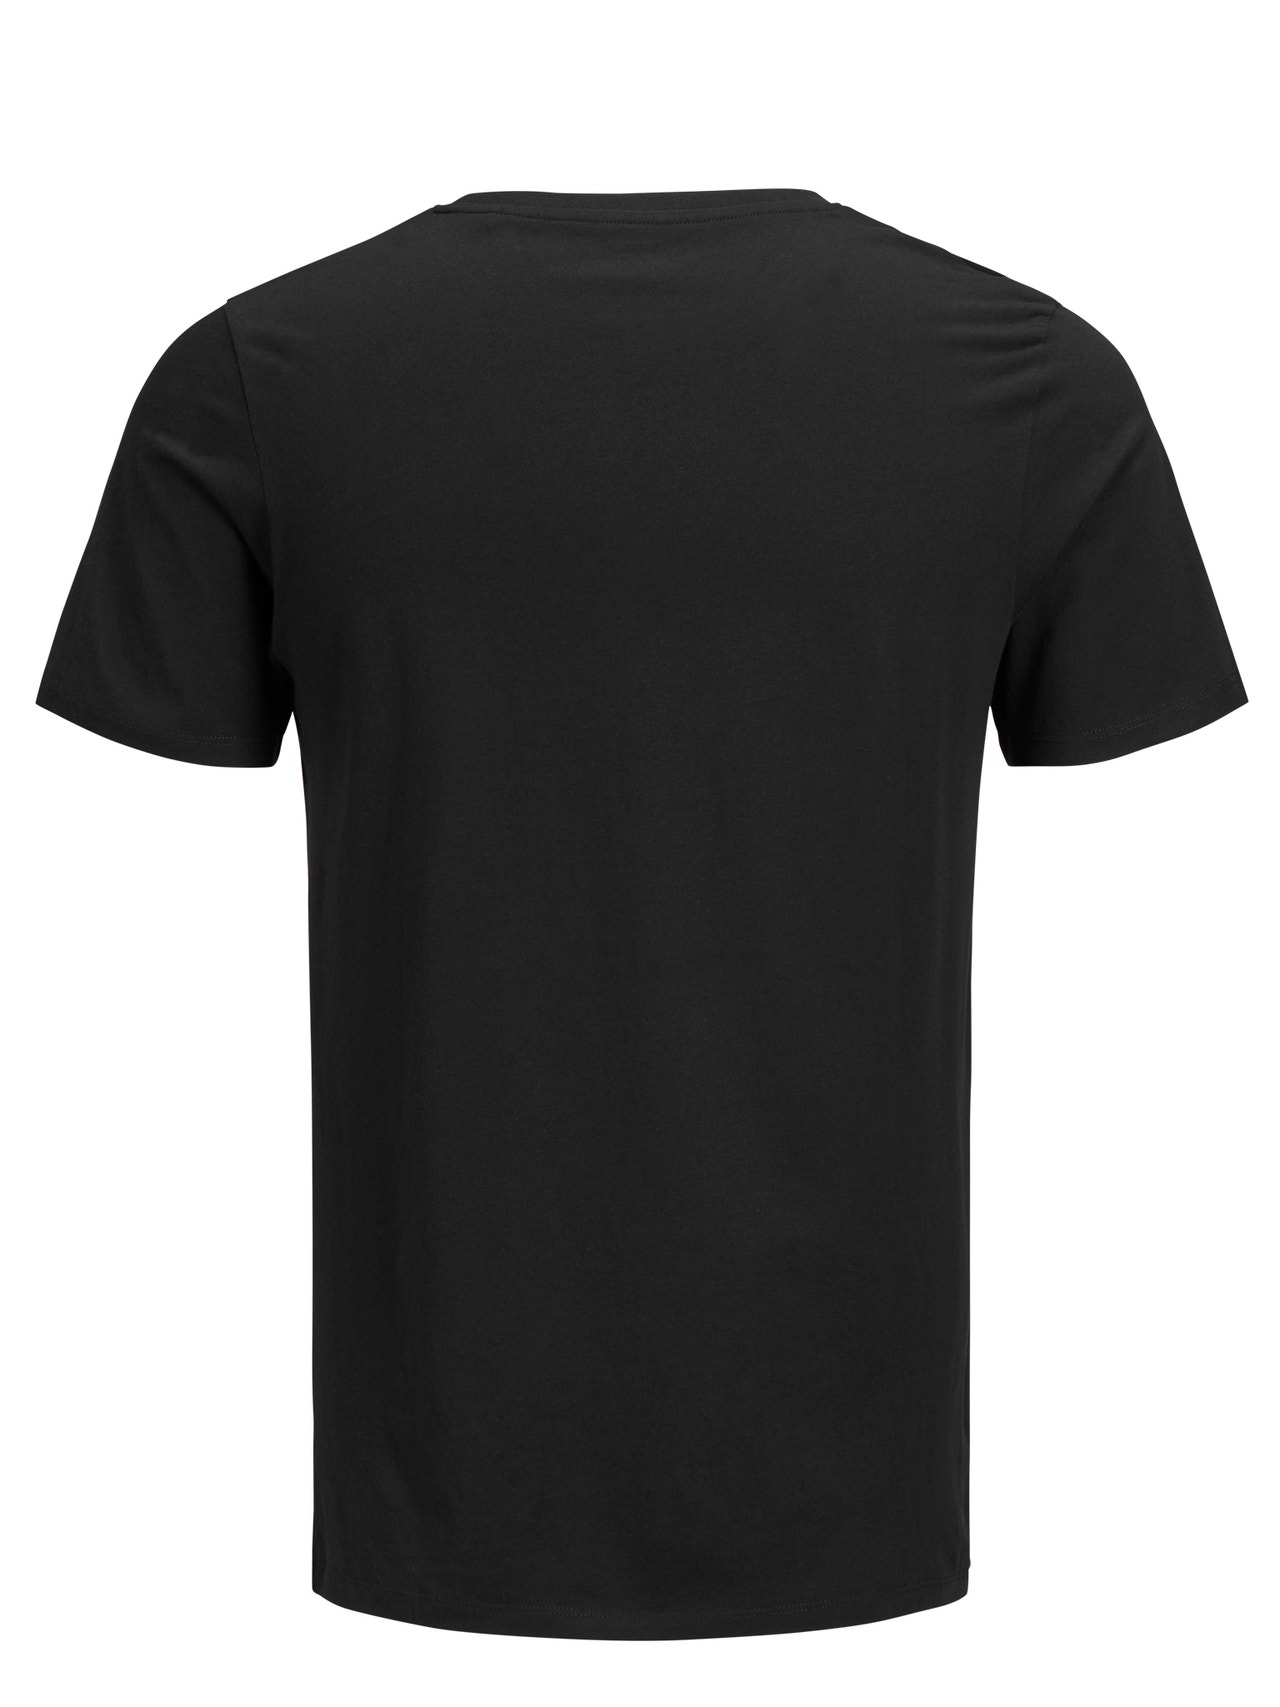 Jack & Jones T-shirt Logo Col rond -Black - 12137126